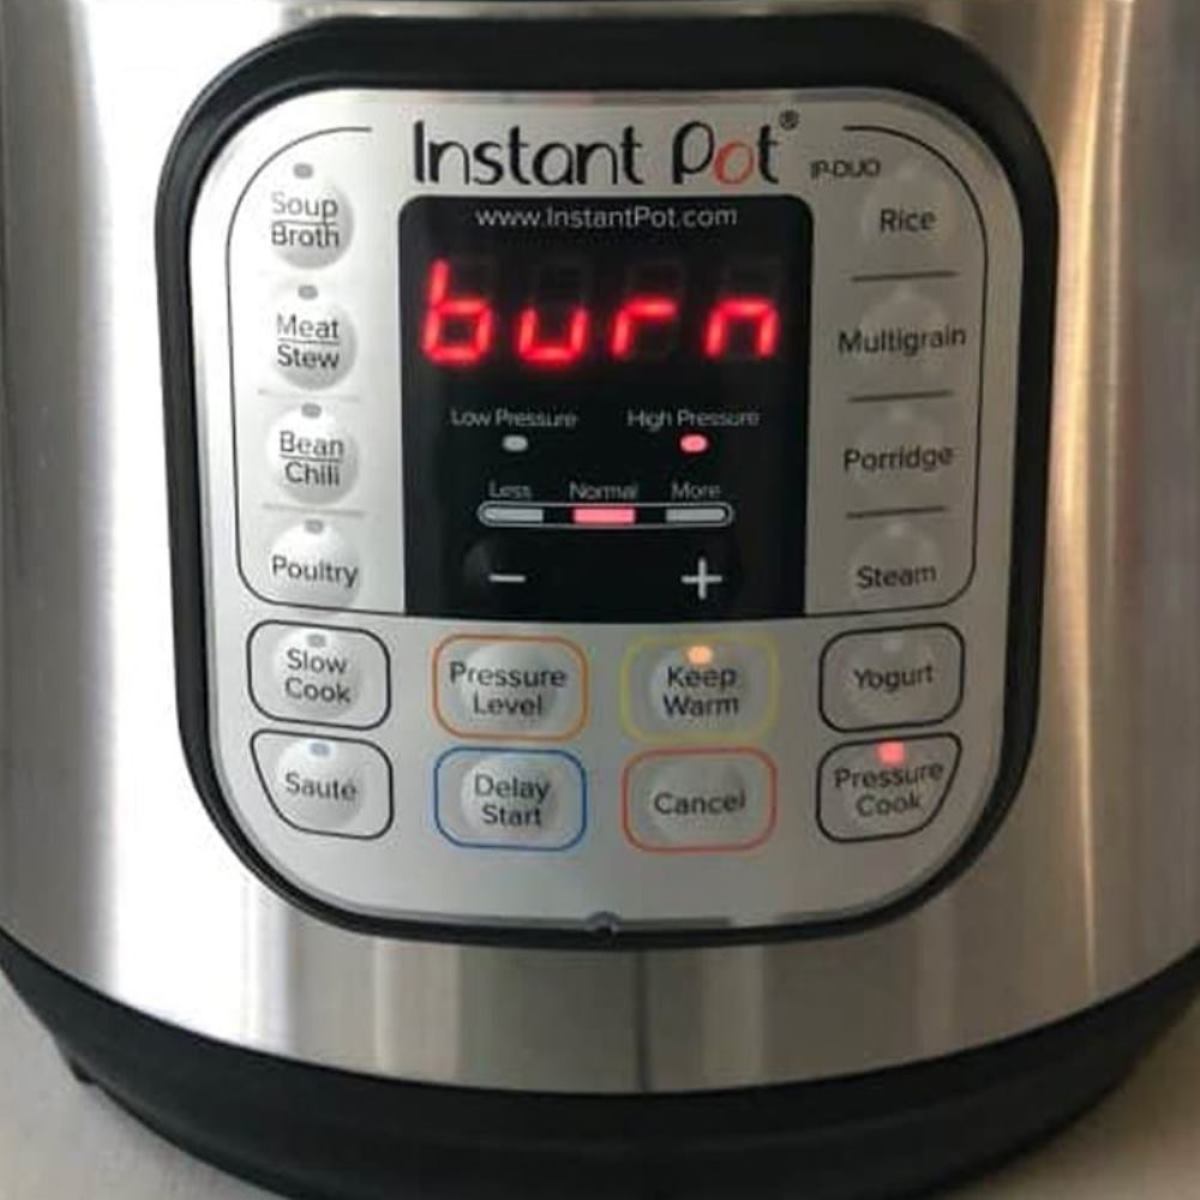 a burn message on Instant Pot